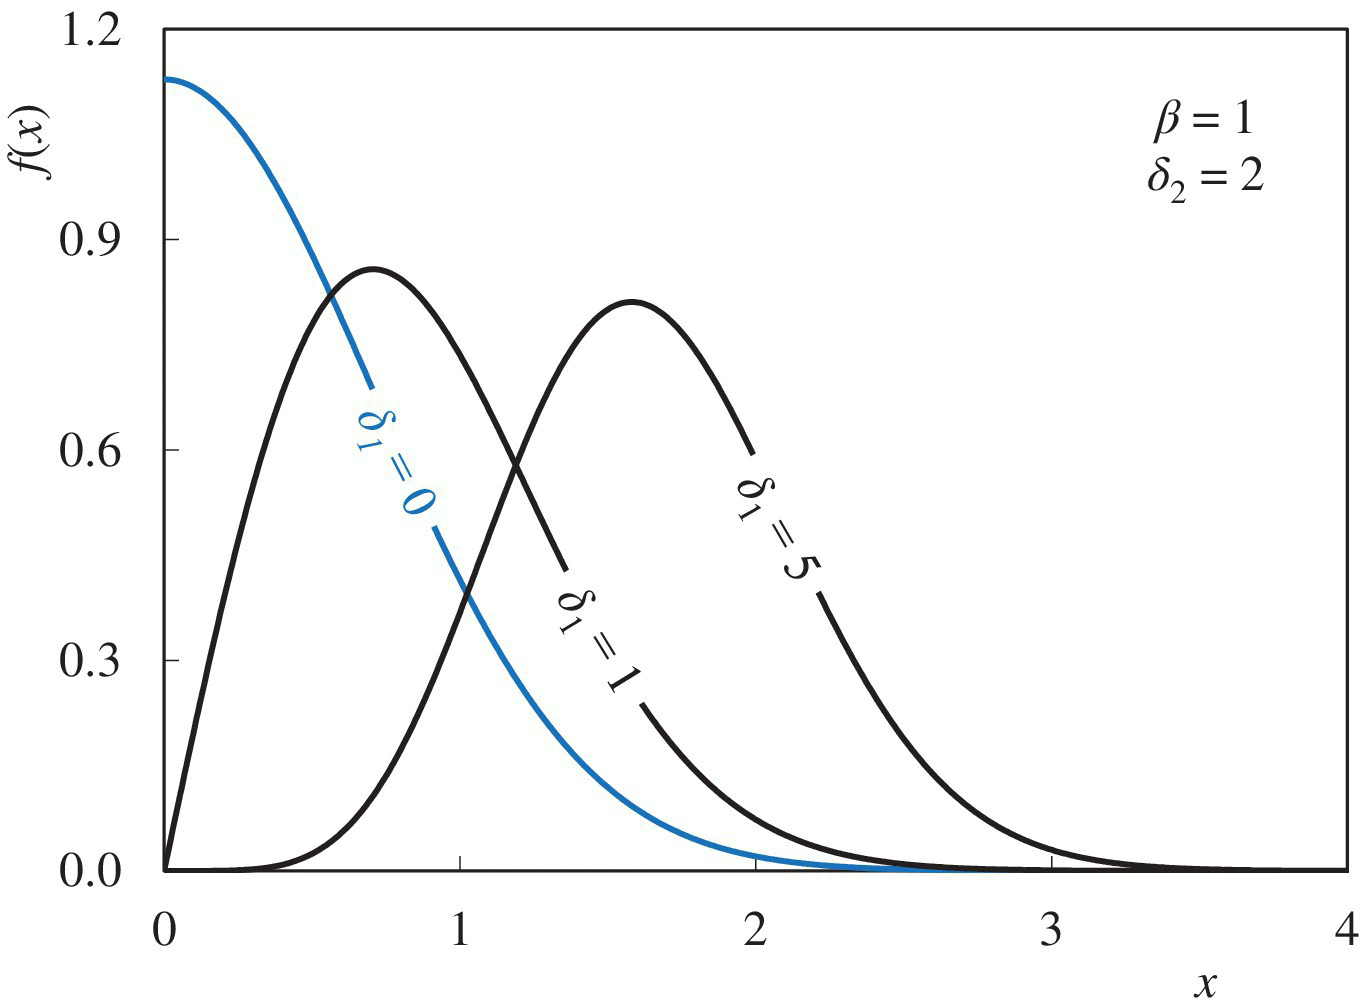 Nukiyama–Tanasawa: Effect of δ1 on shape, with three curves labeled δ1 = 0, δ1 = 1, and δ1 = 5.